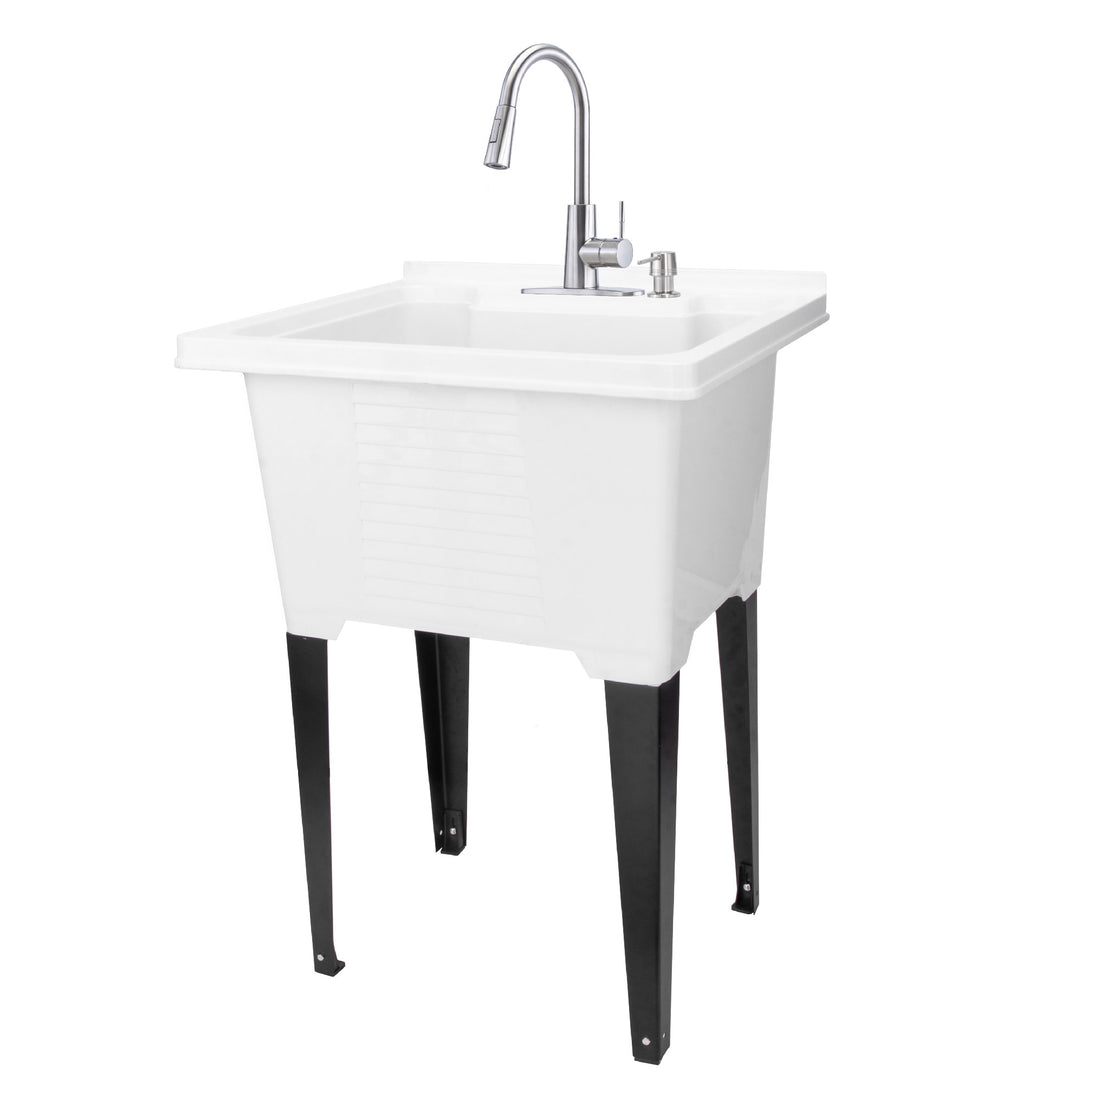 Tehila Luxe Freestanding White Utility Sink with Stainless Steel Finish High-Arc Pull-Down Faucet - Utility sinks vanites Tehila